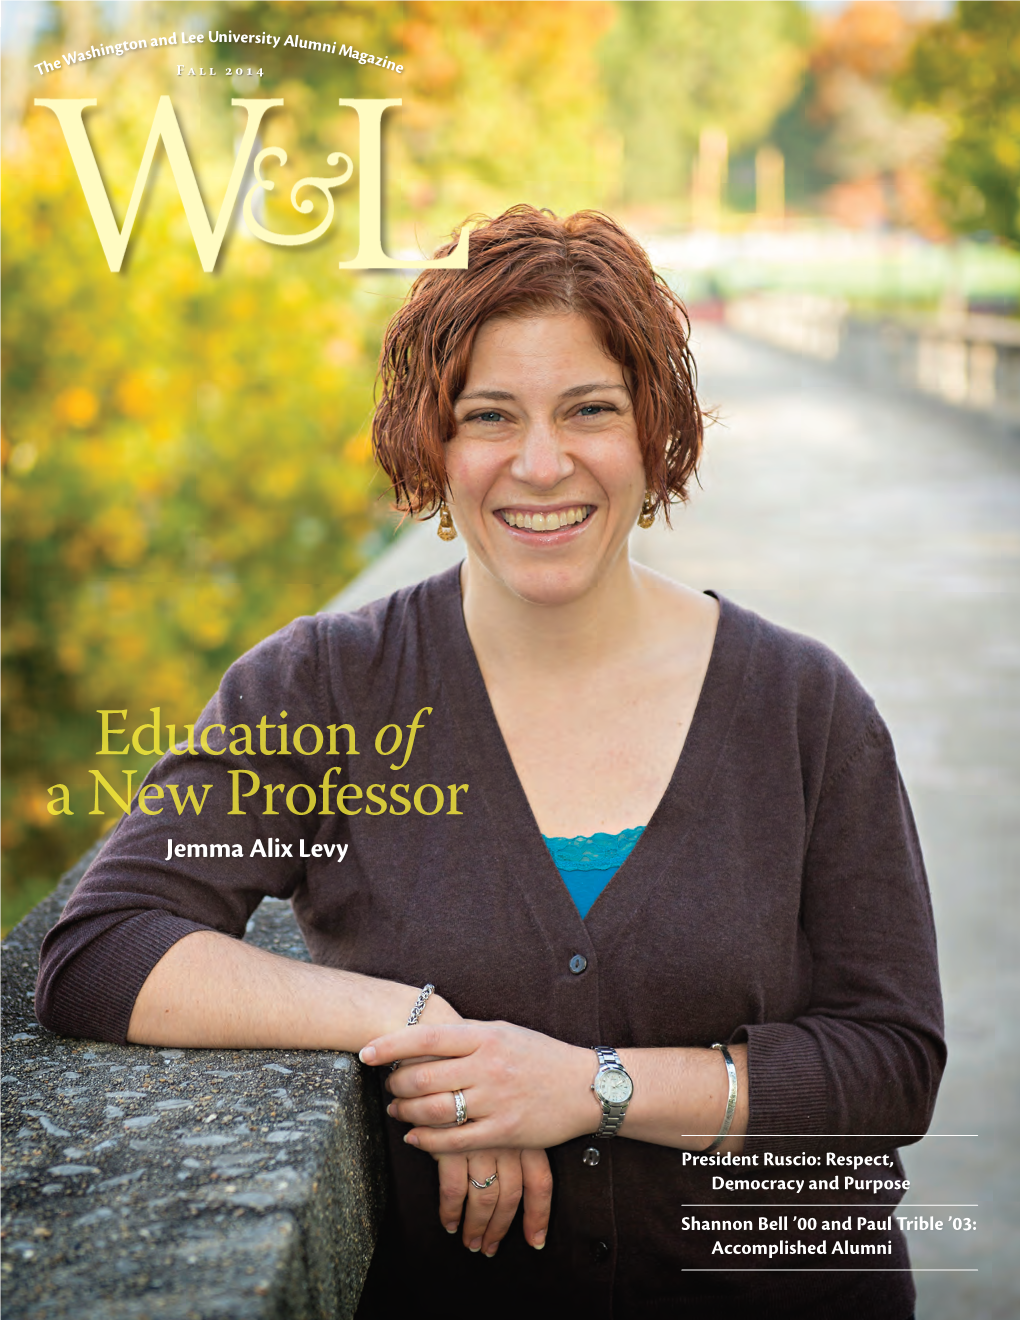 Education of a New Professor Jemma Alix Levy